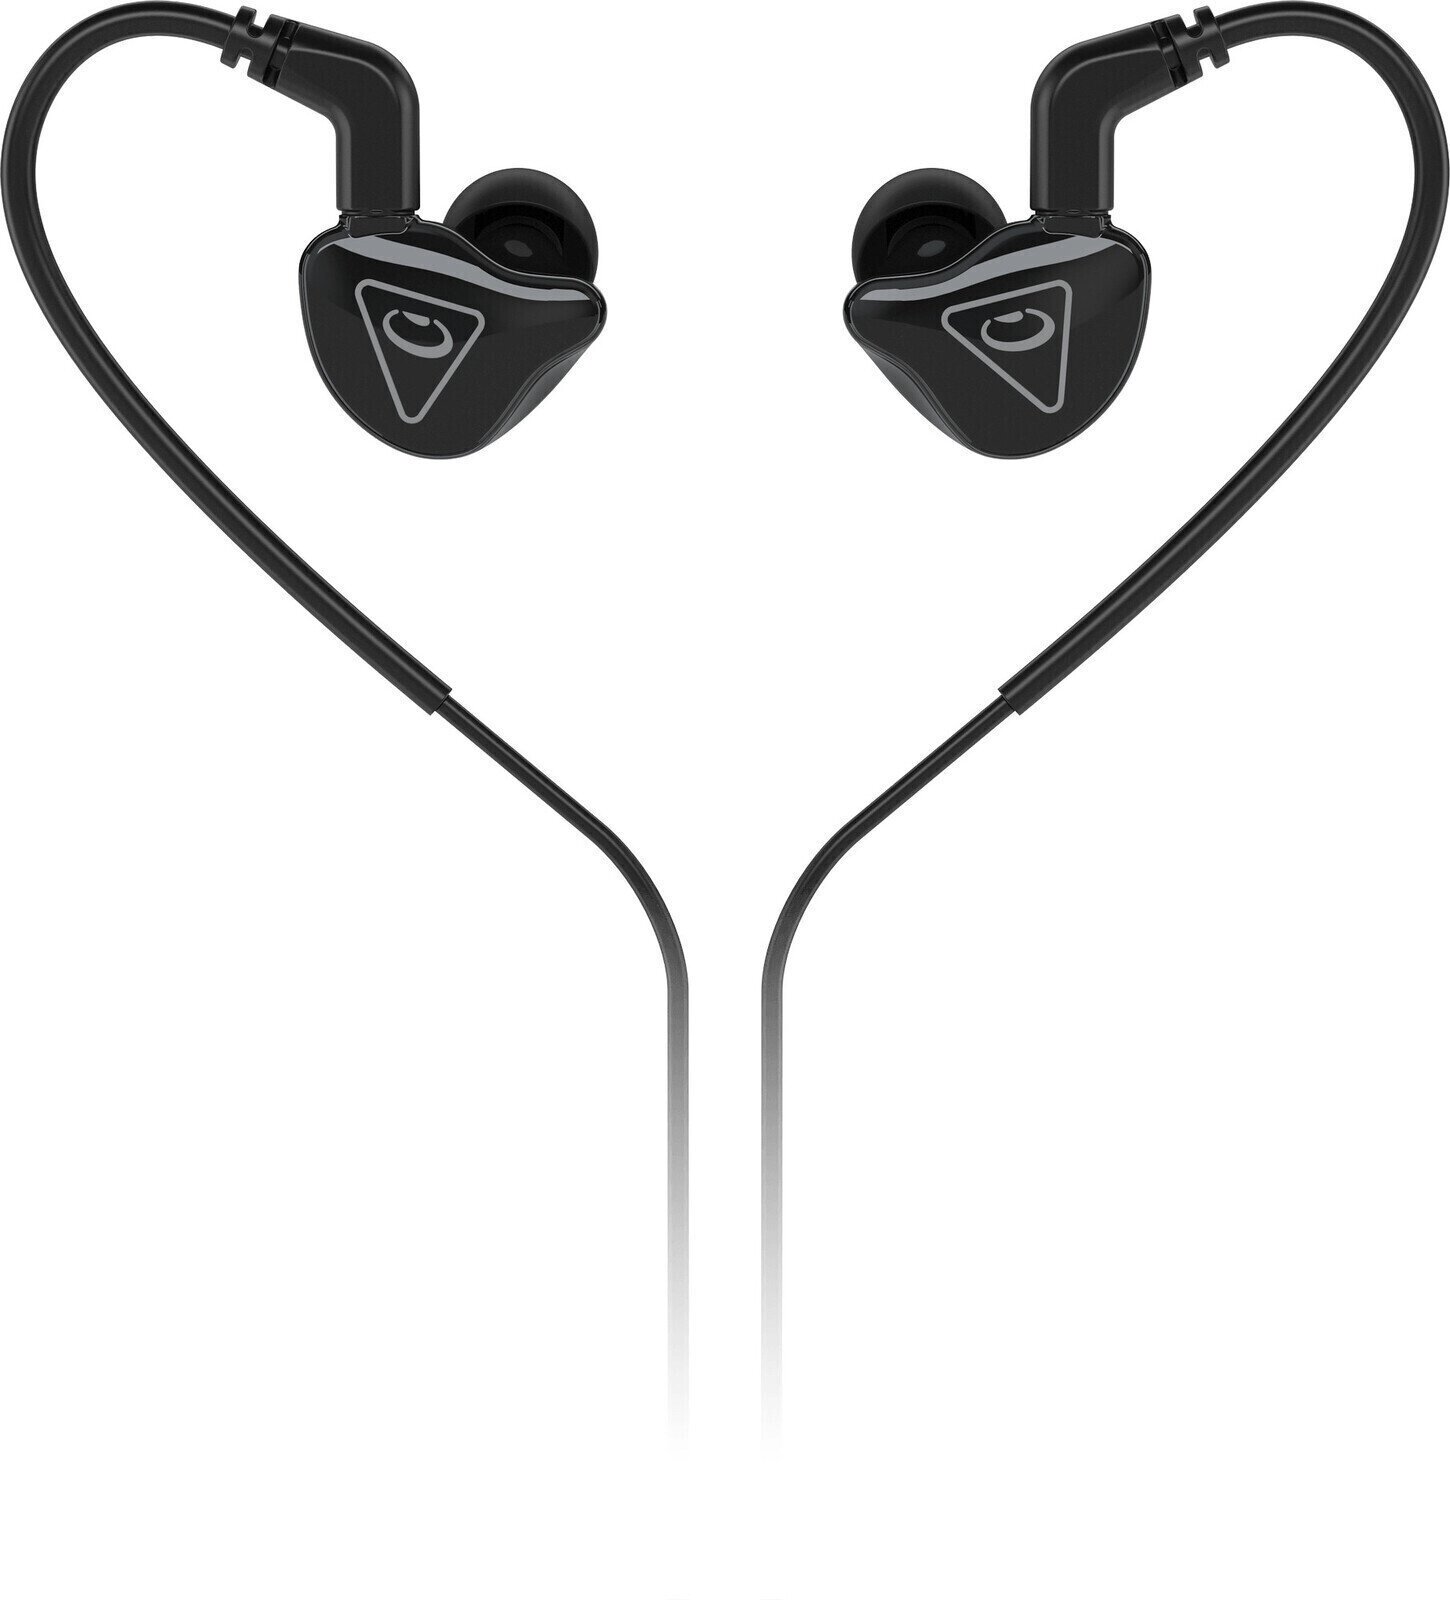 Ohrbügel-Kopfhörer Behringer MO240 Schwarz